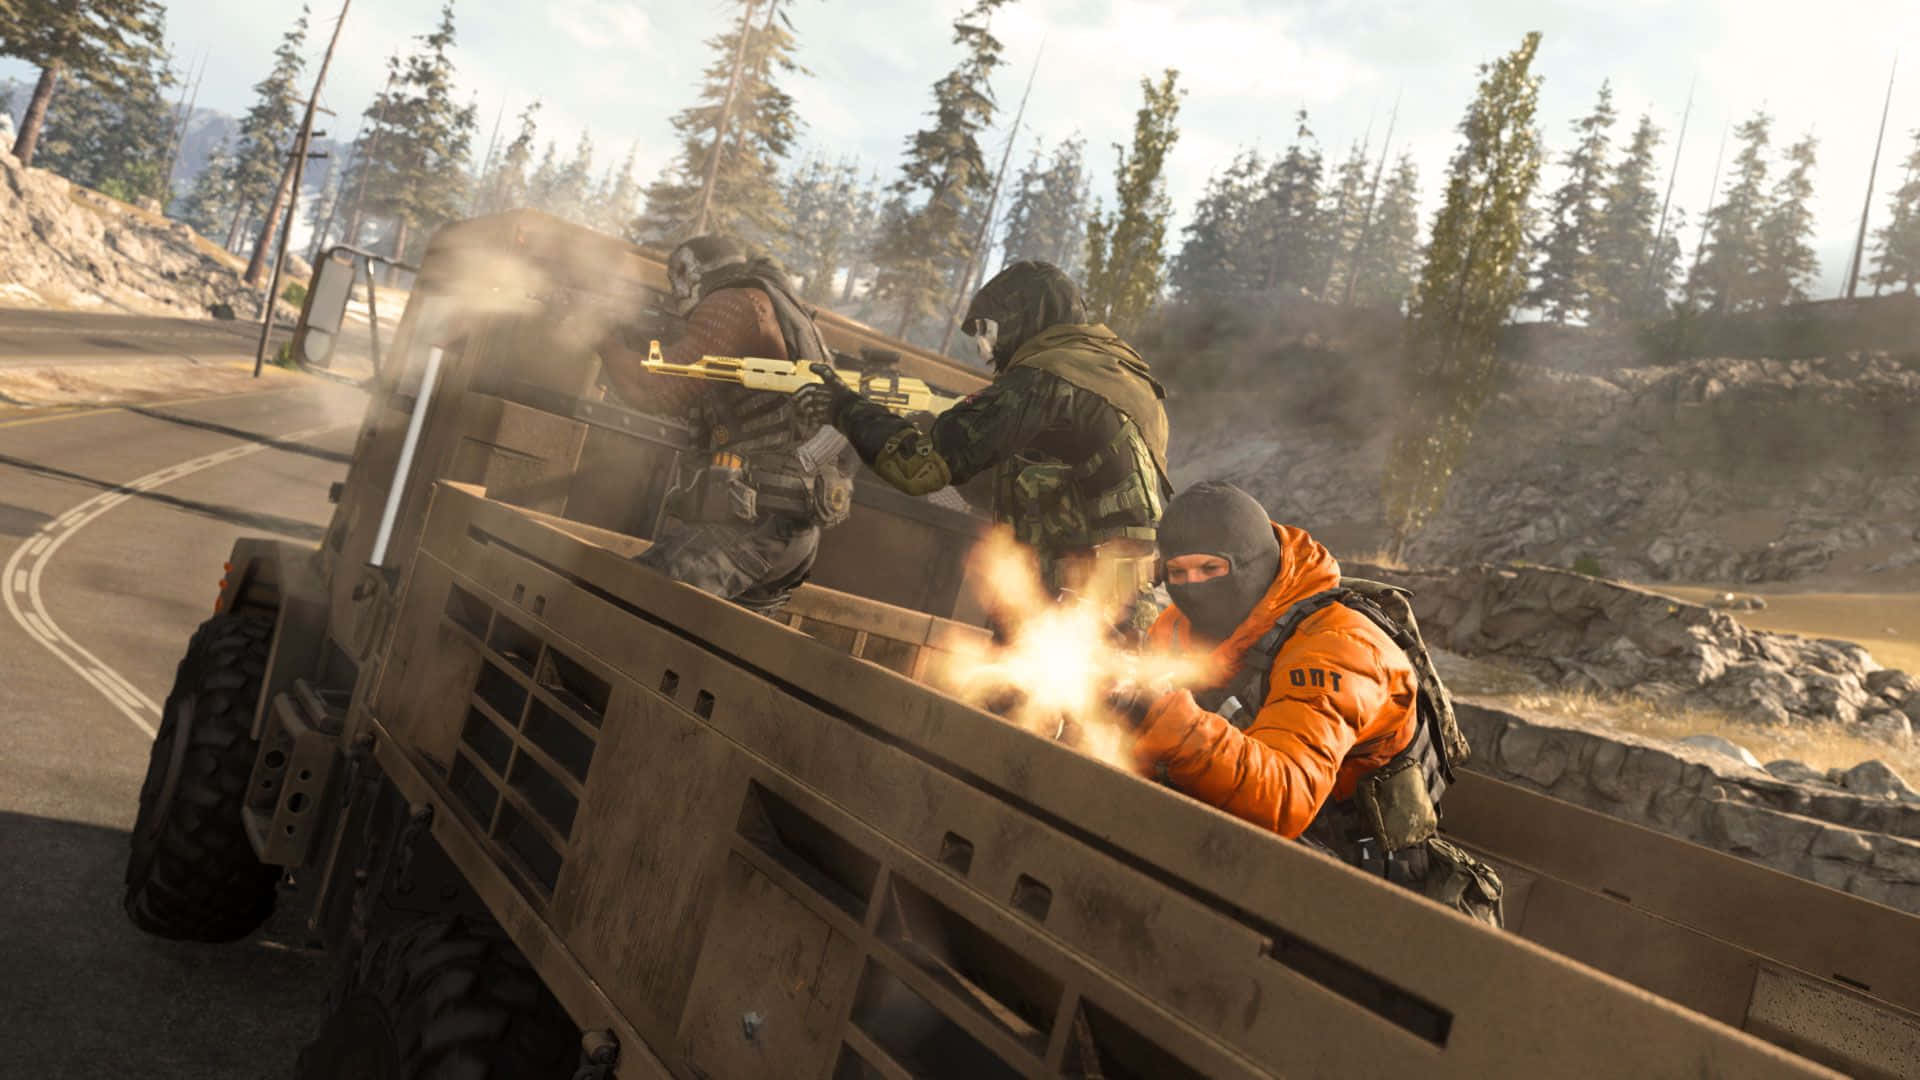 Intensaacción En El Campo De Batalla En Call Of Duty Con Vehículos Tácticos. Fondo de pantalla